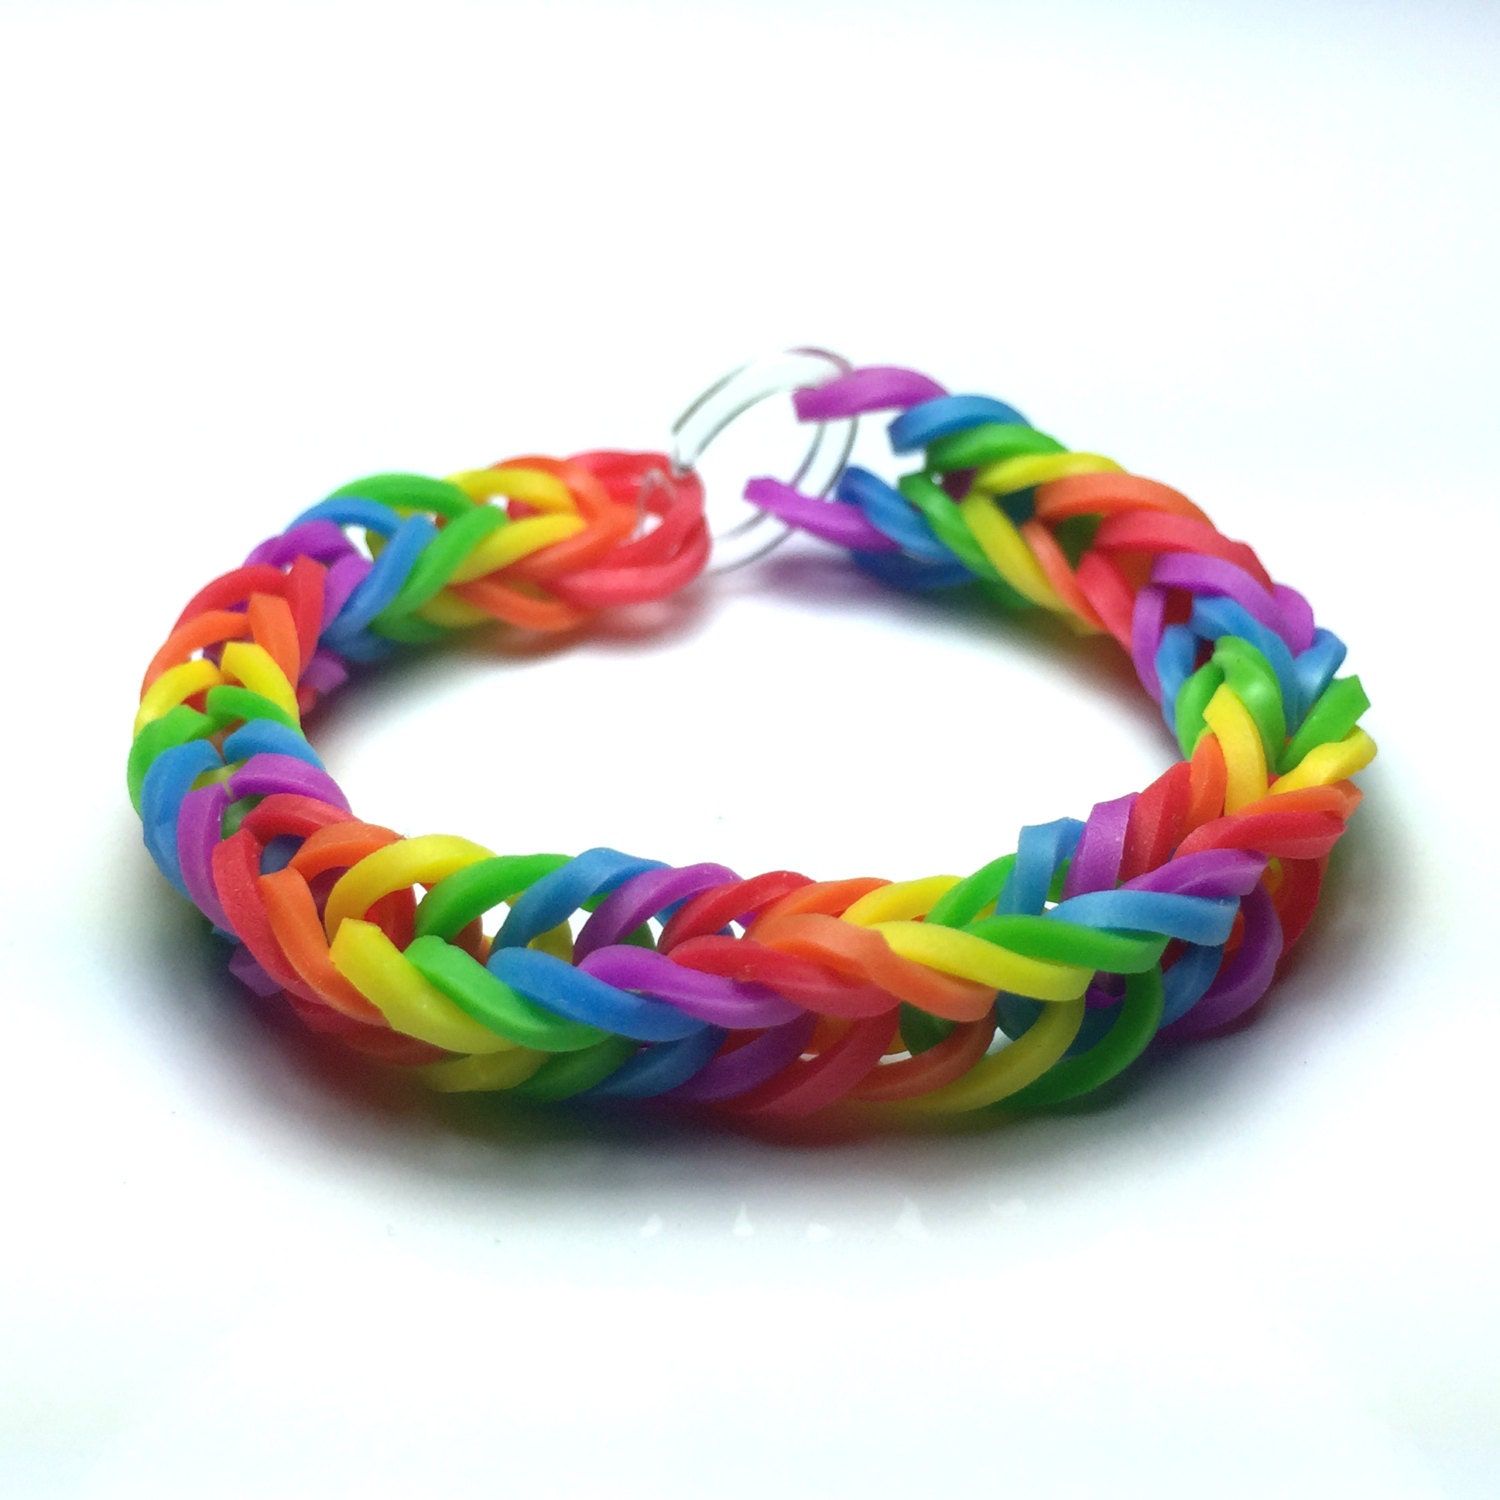 Rainbow Colored Rainbow Loom Rubber Band Bracelet Fishtail